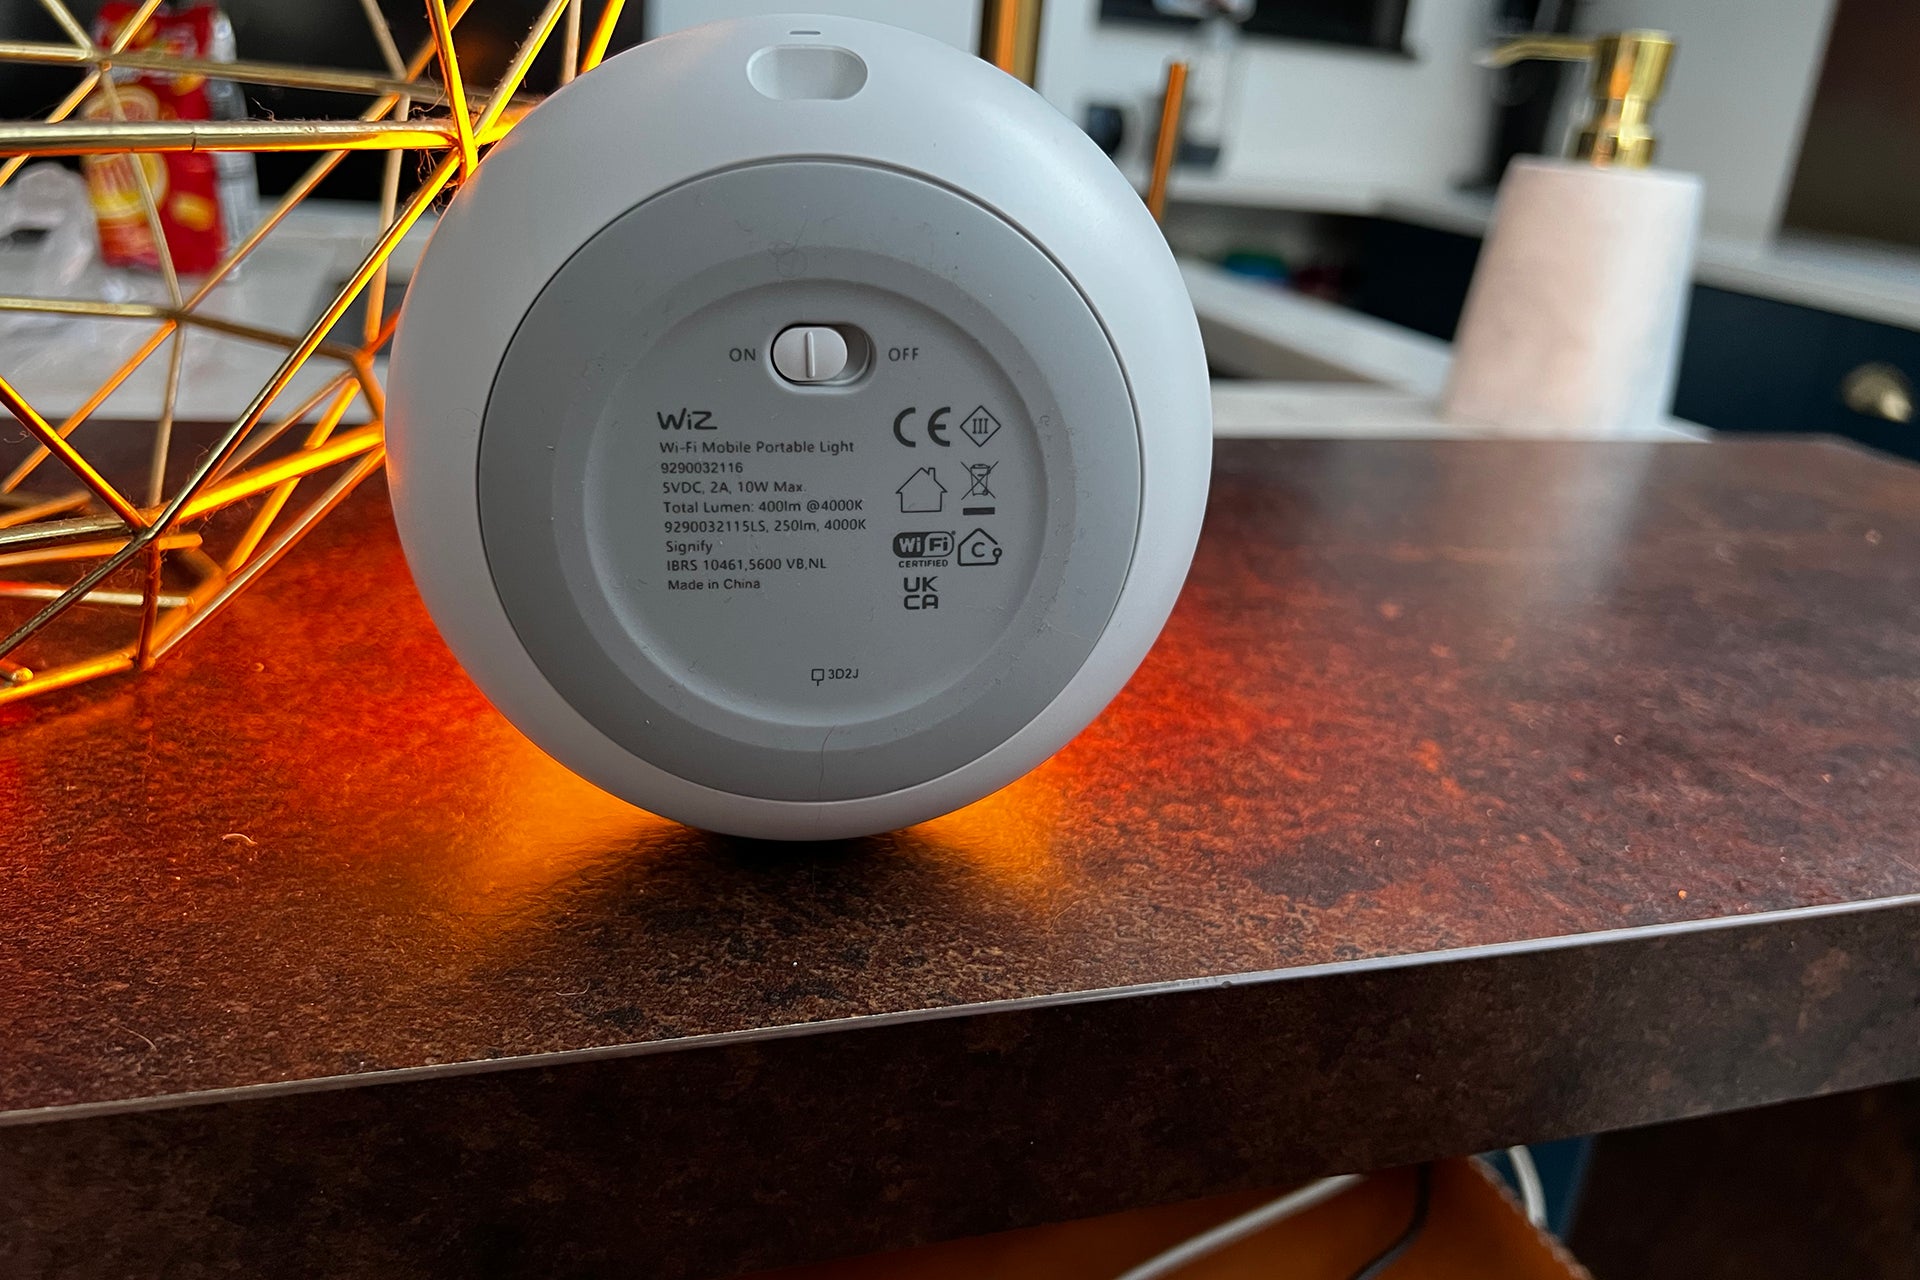 Interruptor de encendido físico WiZ Luminaire Mobile Portable Light